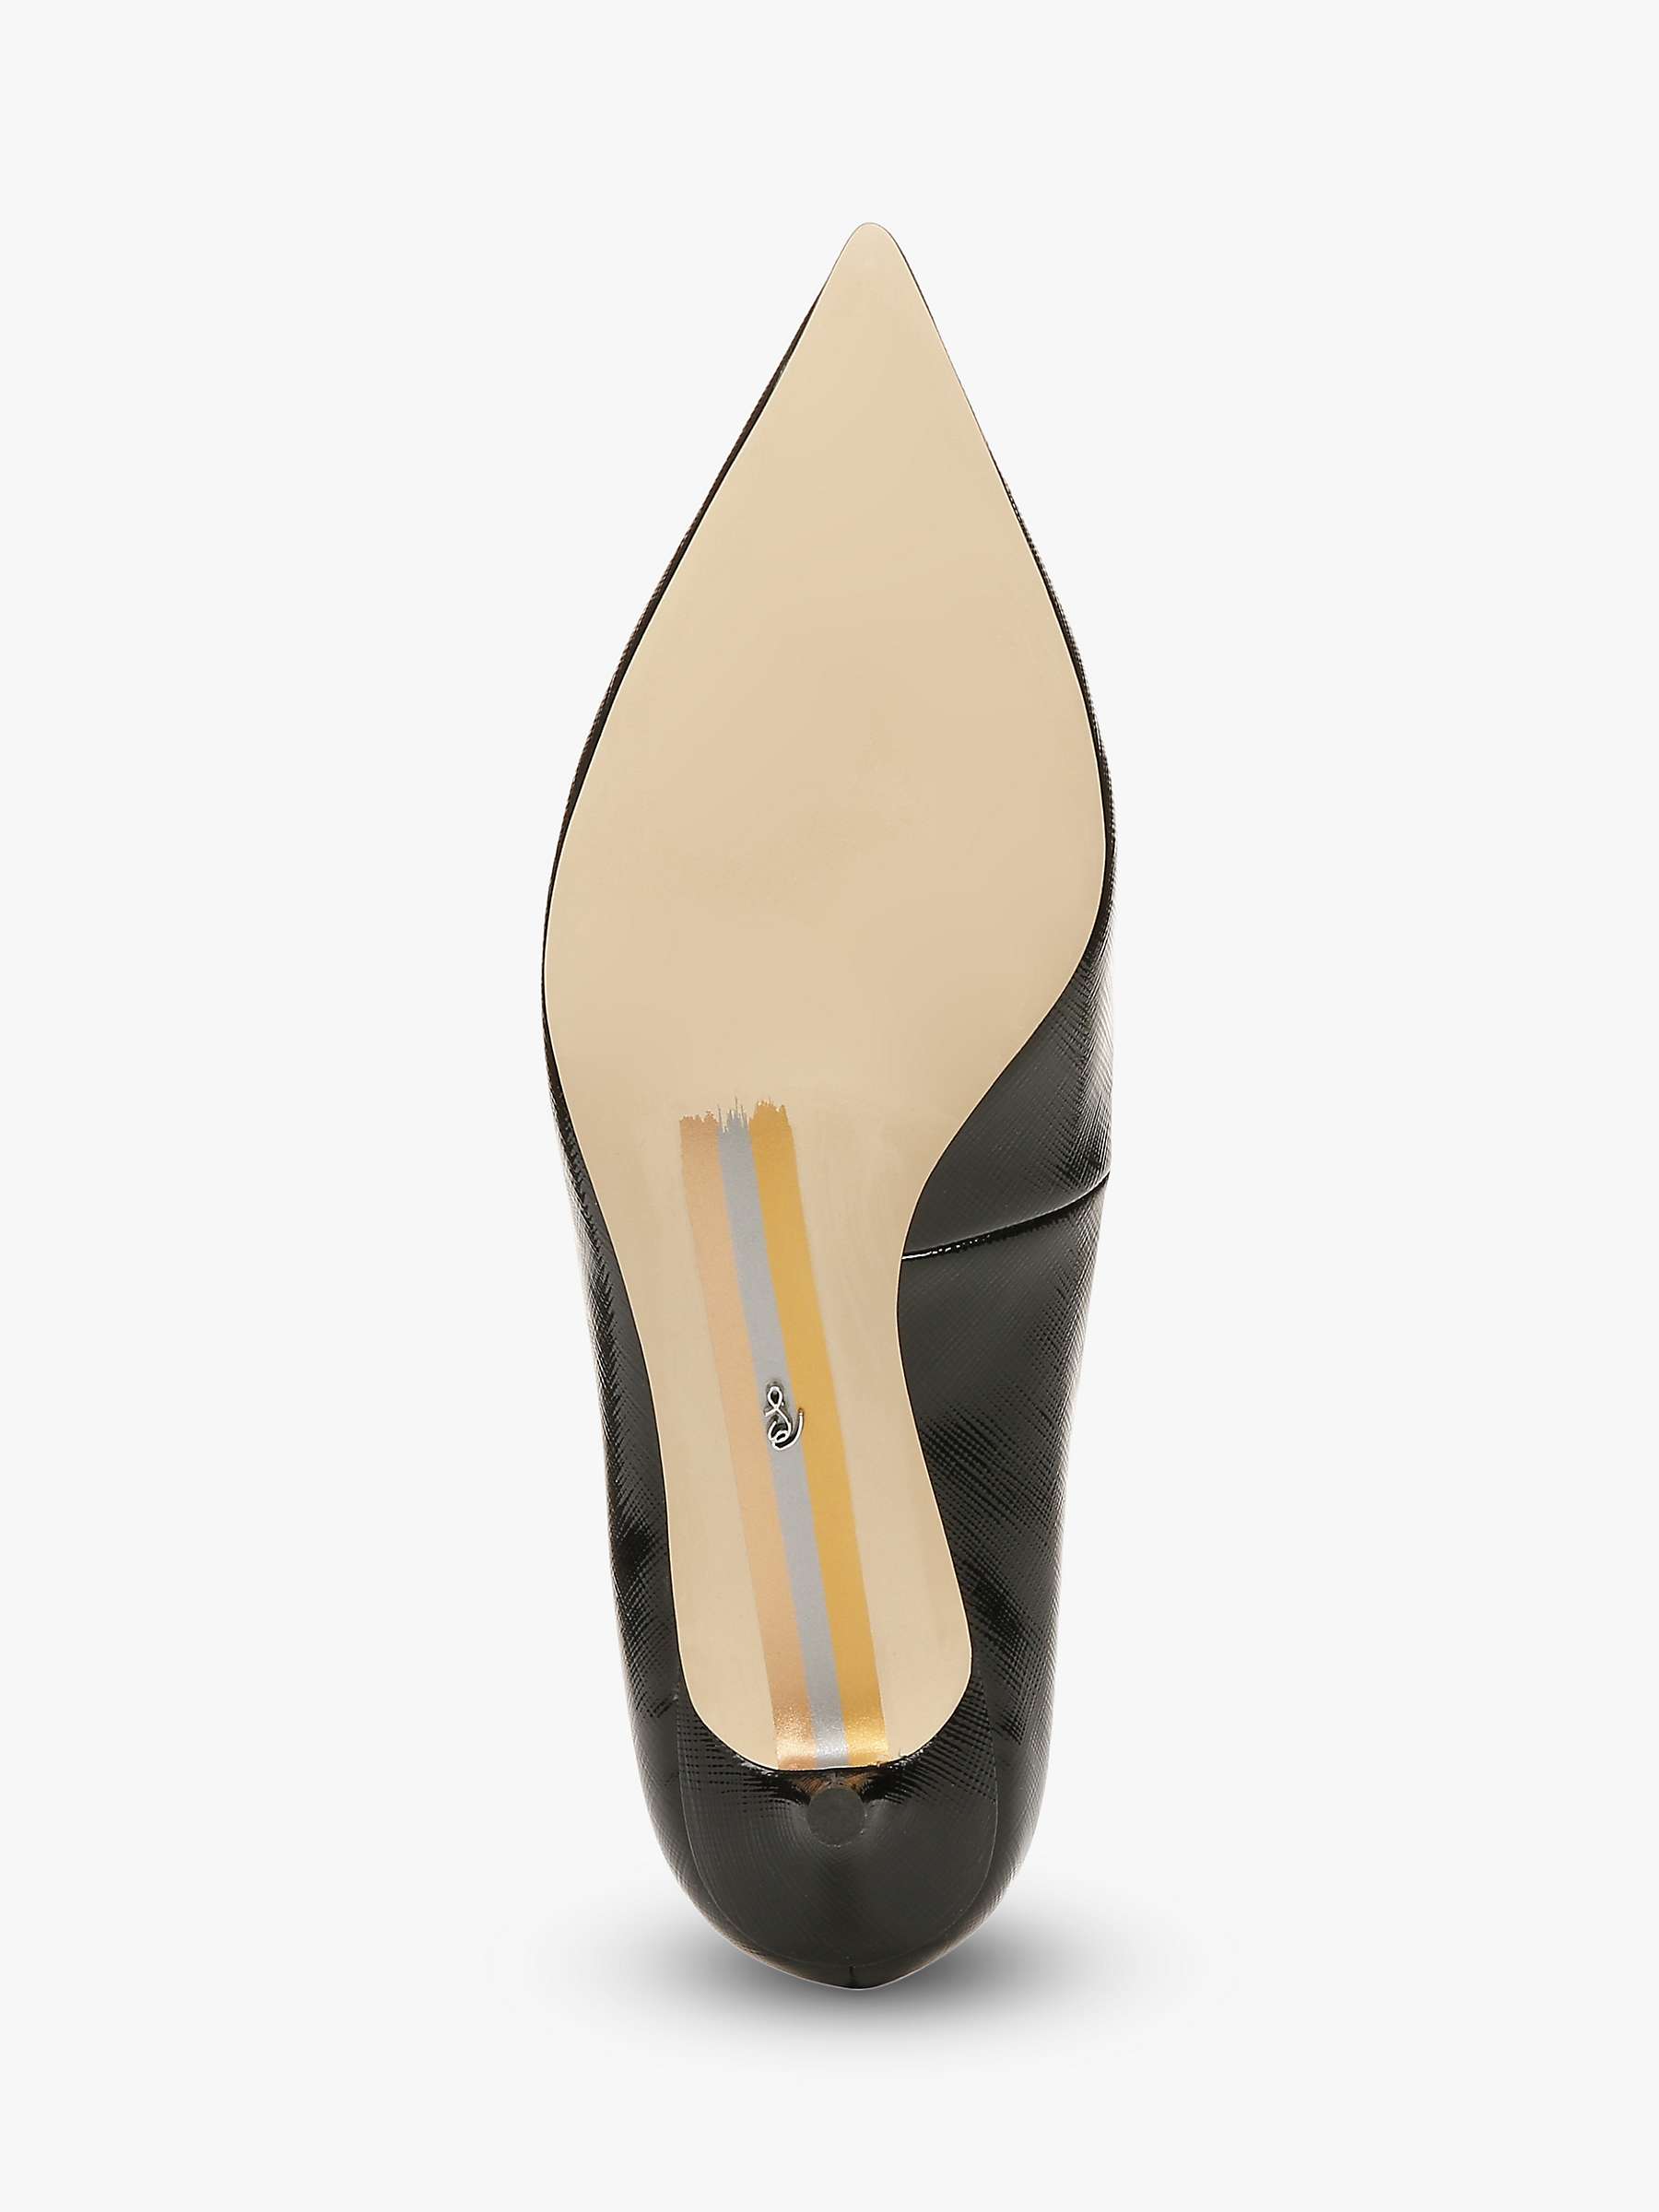 Buy Sam Edelman Franci Kitten Heel Court Shoes Online at johnlewis.com